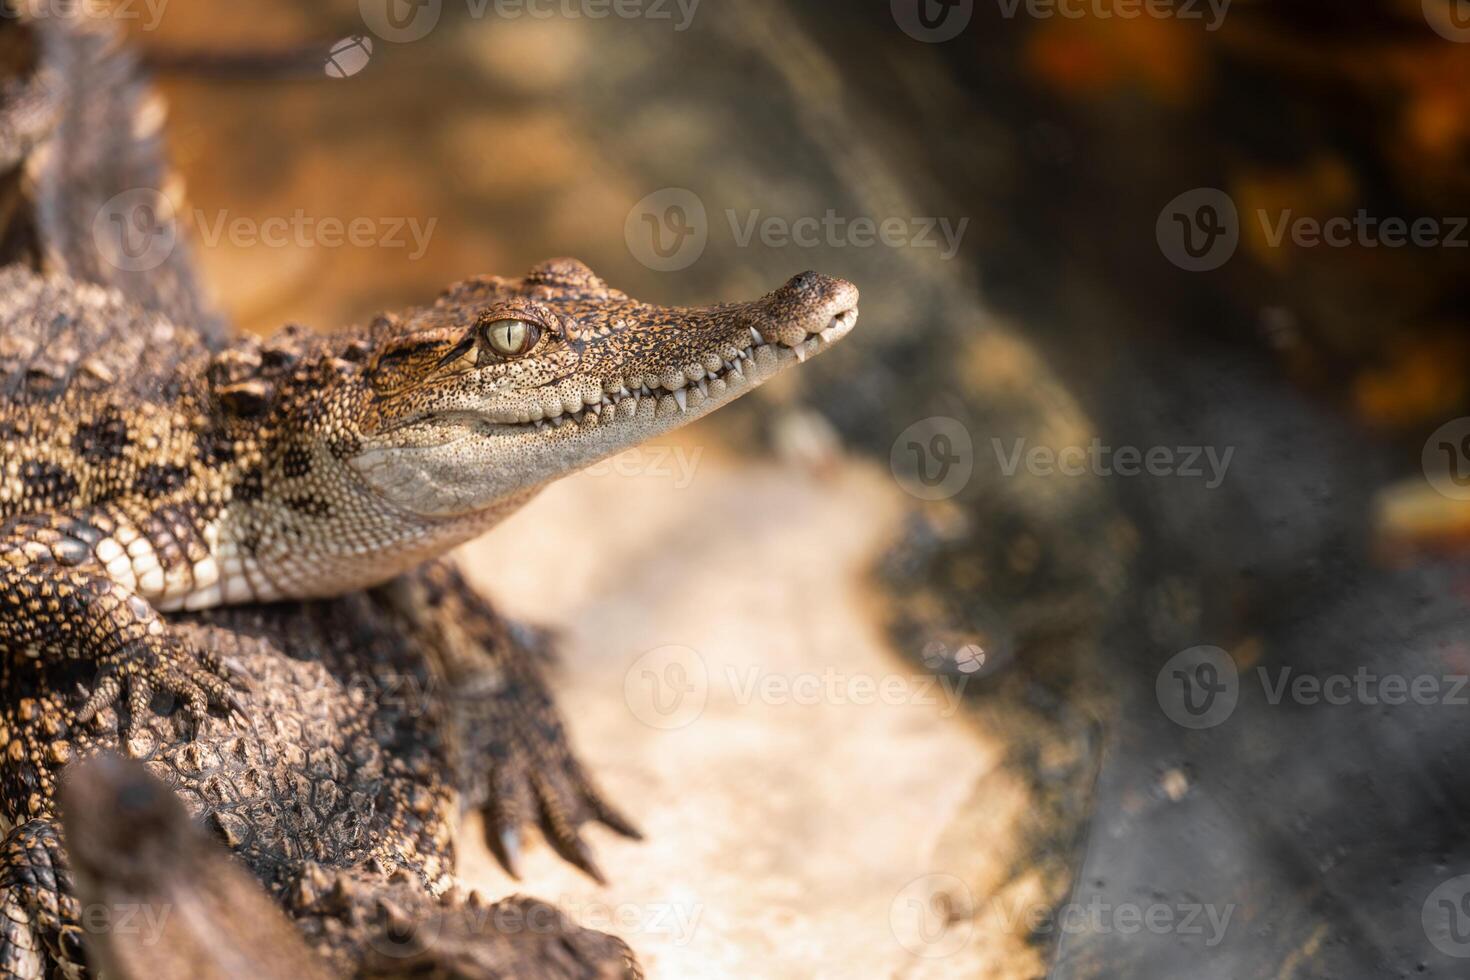 Alligator and crocodile in the wild swamp, showcasing reptile predators with sharp teeth in their natural habitat. photo